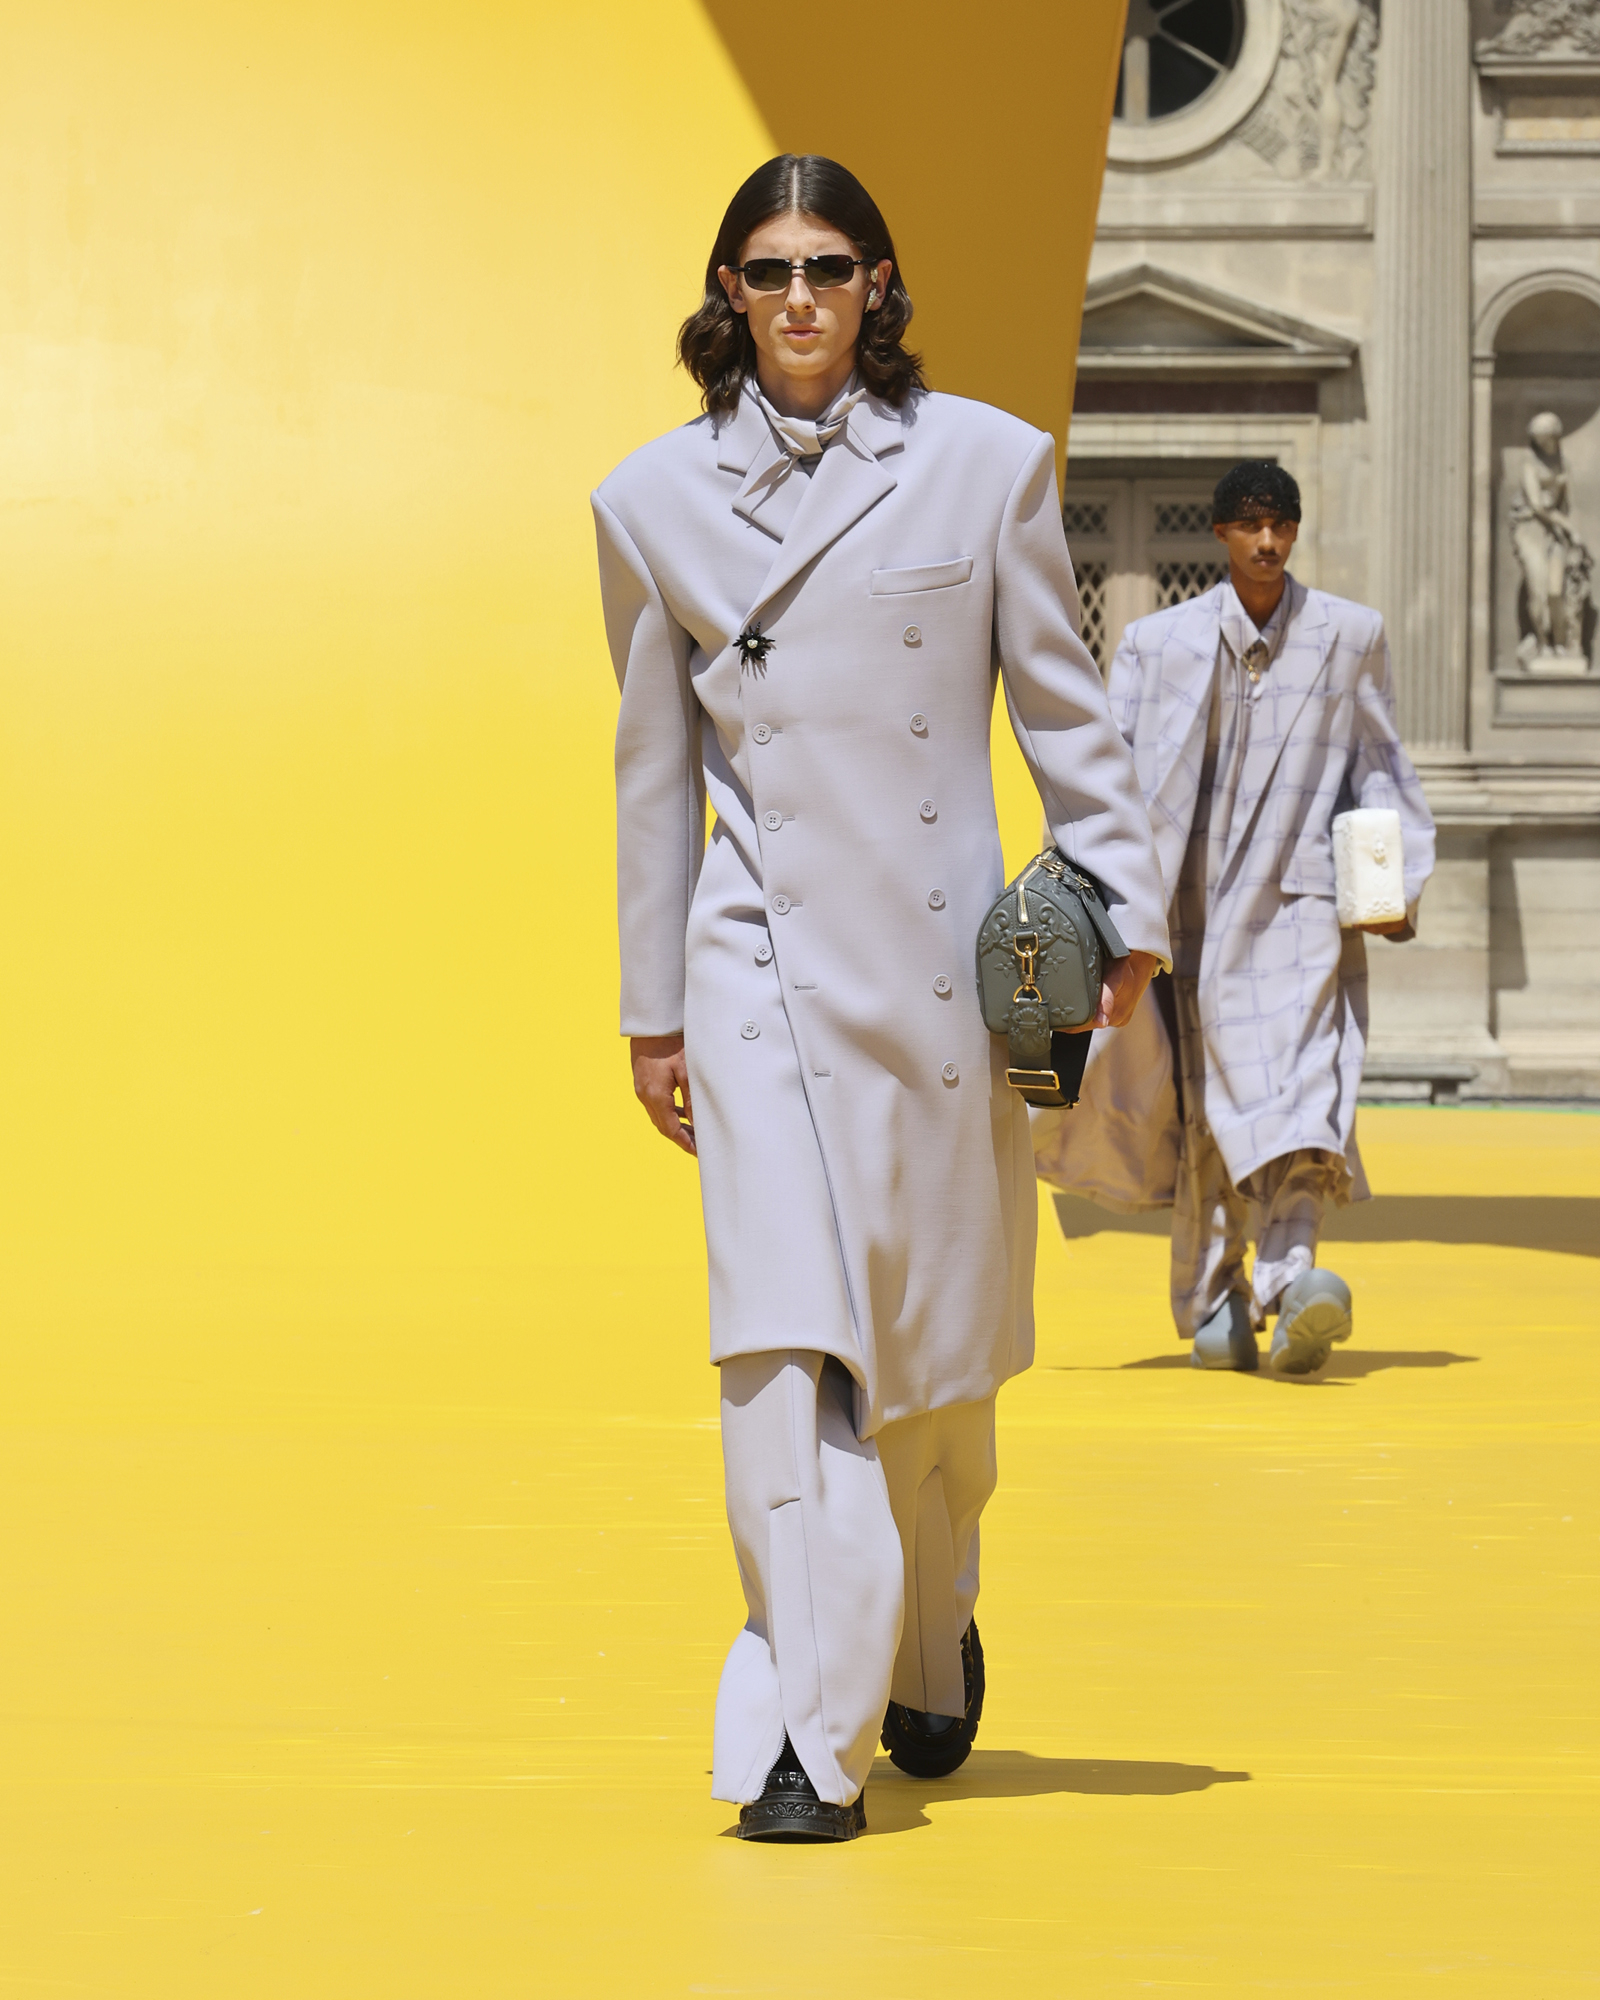 Louis Vuitton's Spring 2020 menswear campaign explores the beauty